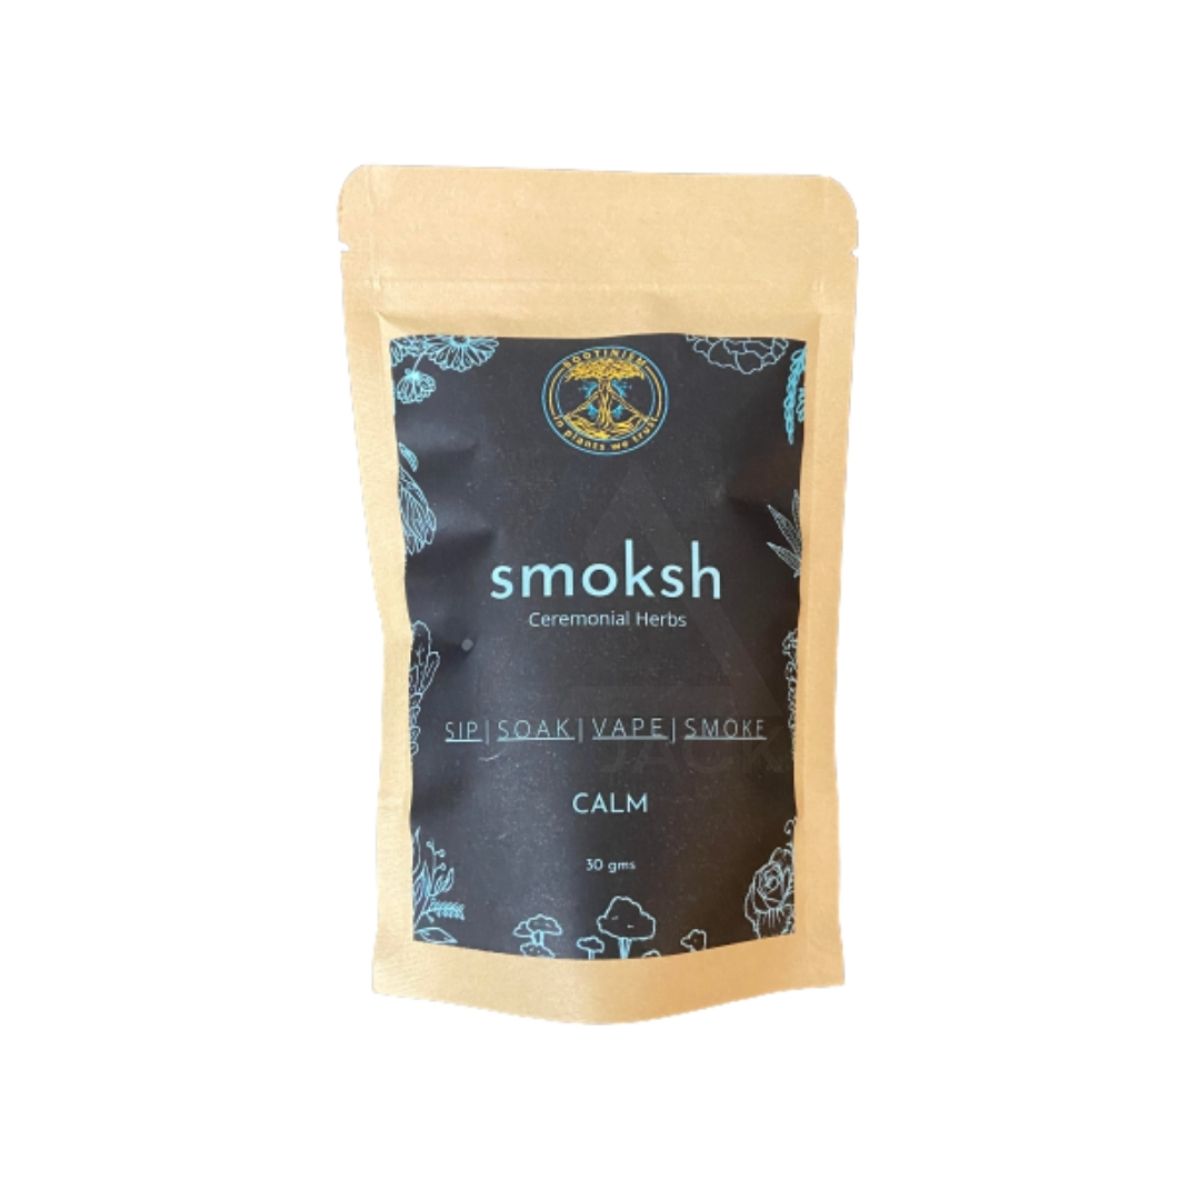 SMOKSH CALM Herbal Smoking Blend 30gms Pack | HighJack